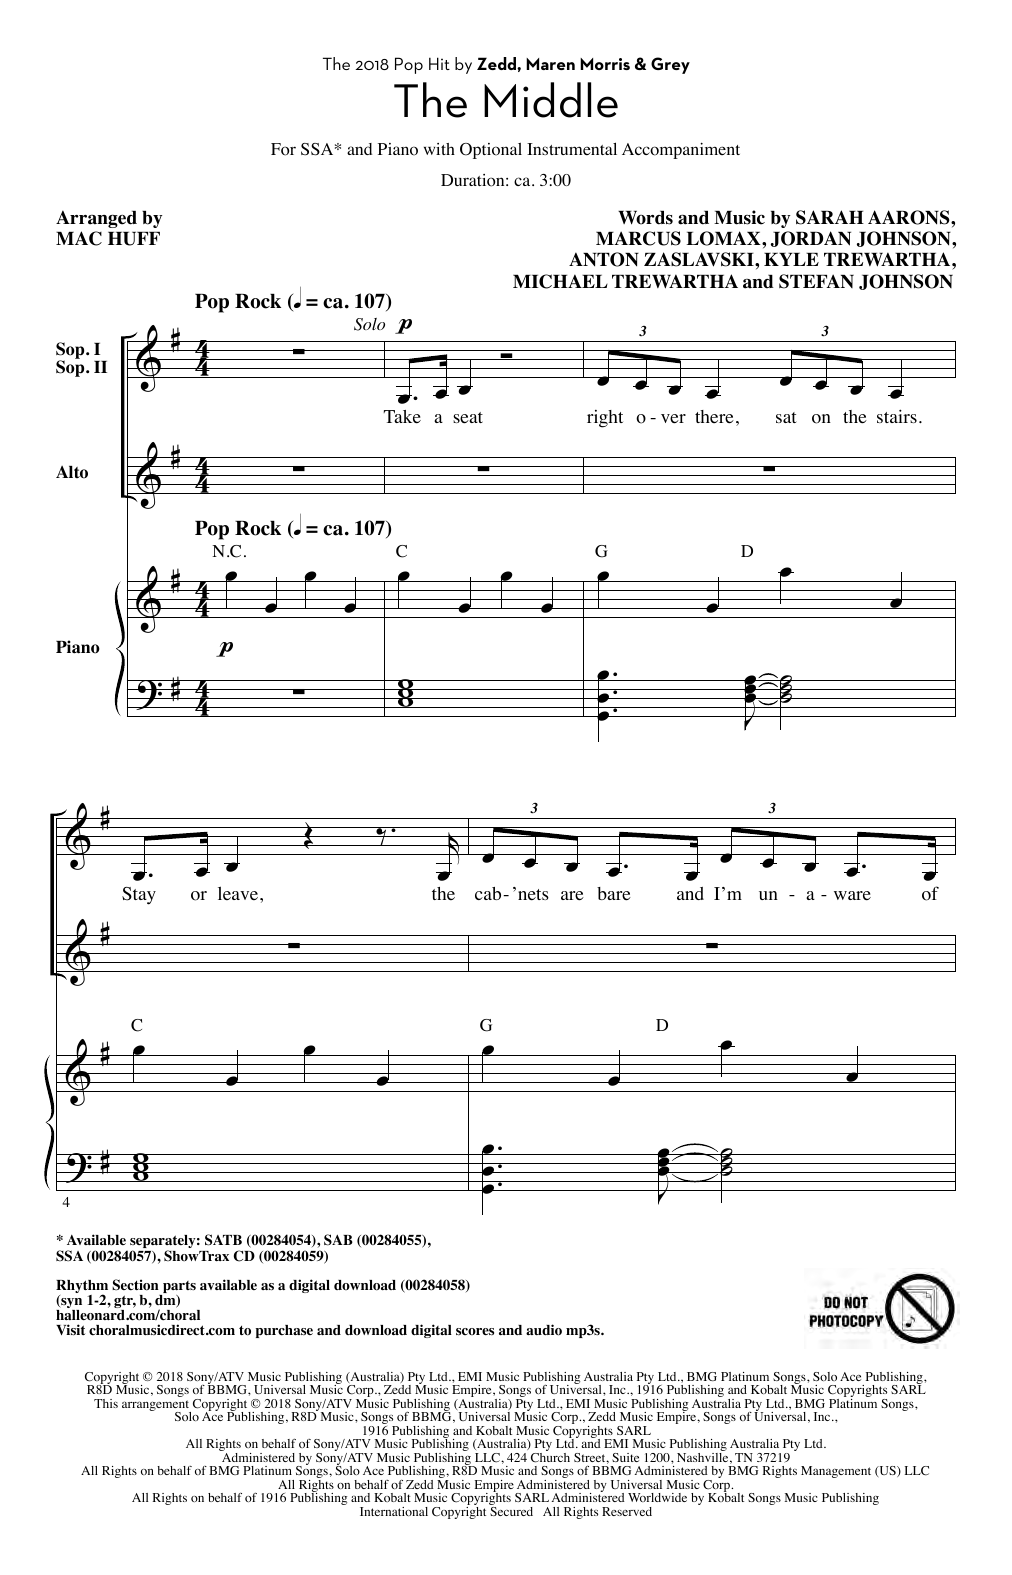 Zedd, Maren Morris & Grey The Middle (arr. Mac Huff) Sheet Music Notes & Chords for SAB - Download or Print PDF